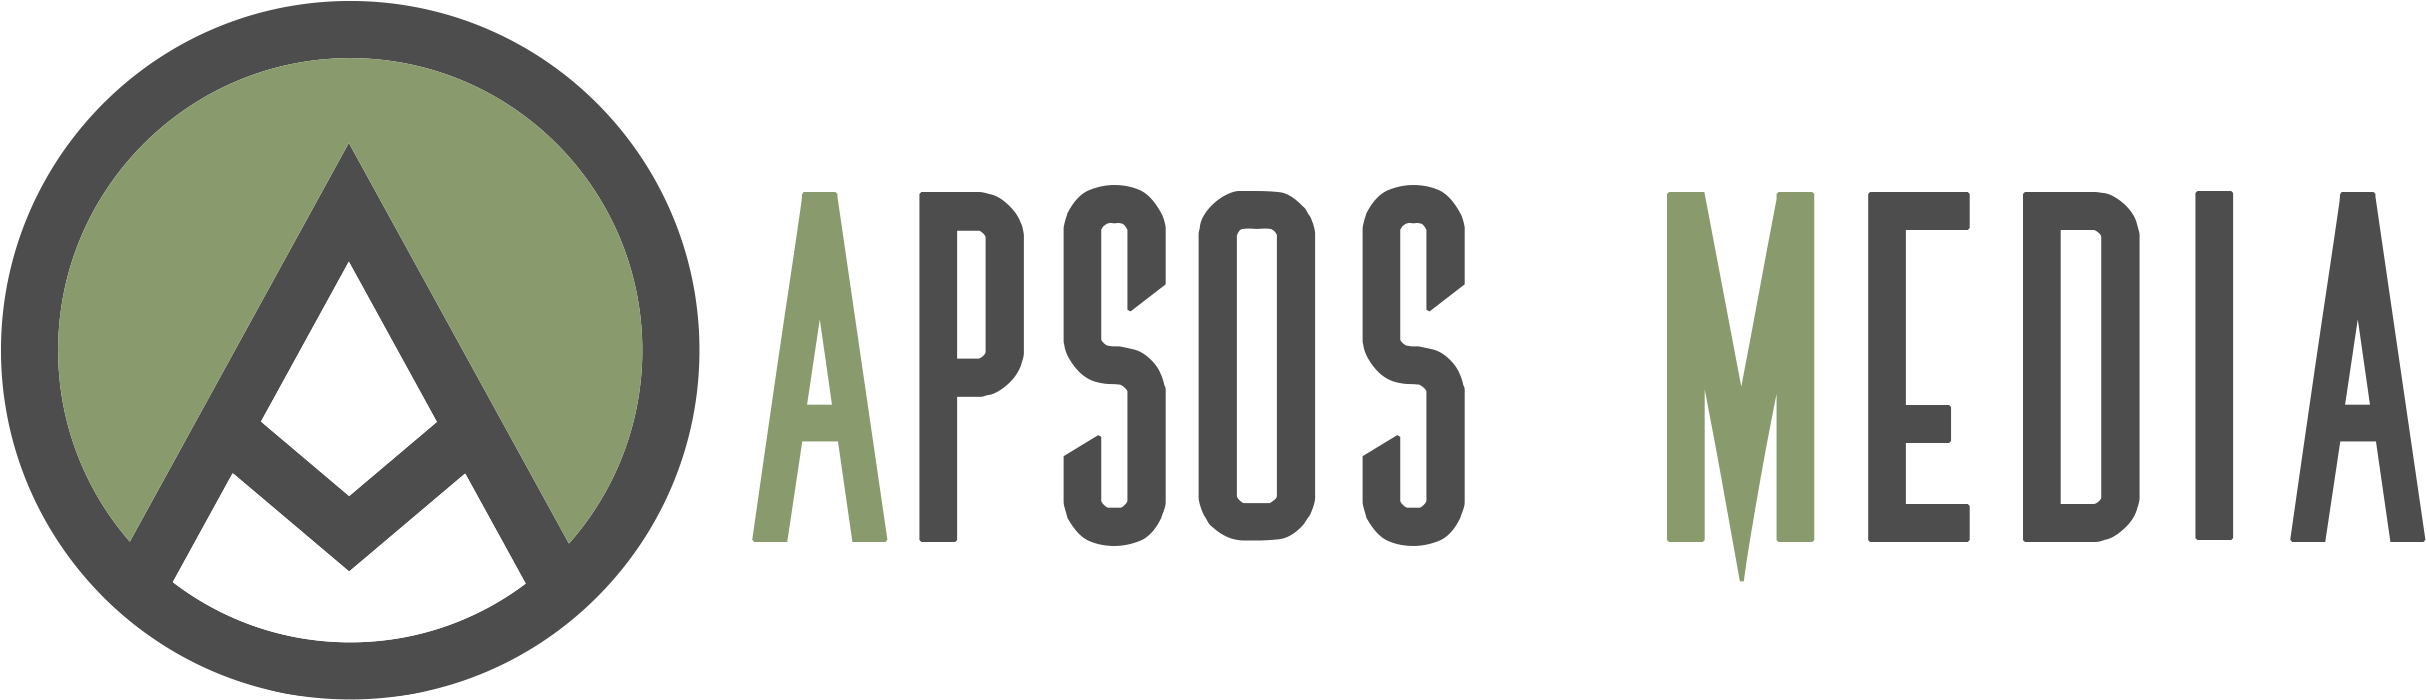 Apsos Media Logo Design PNG